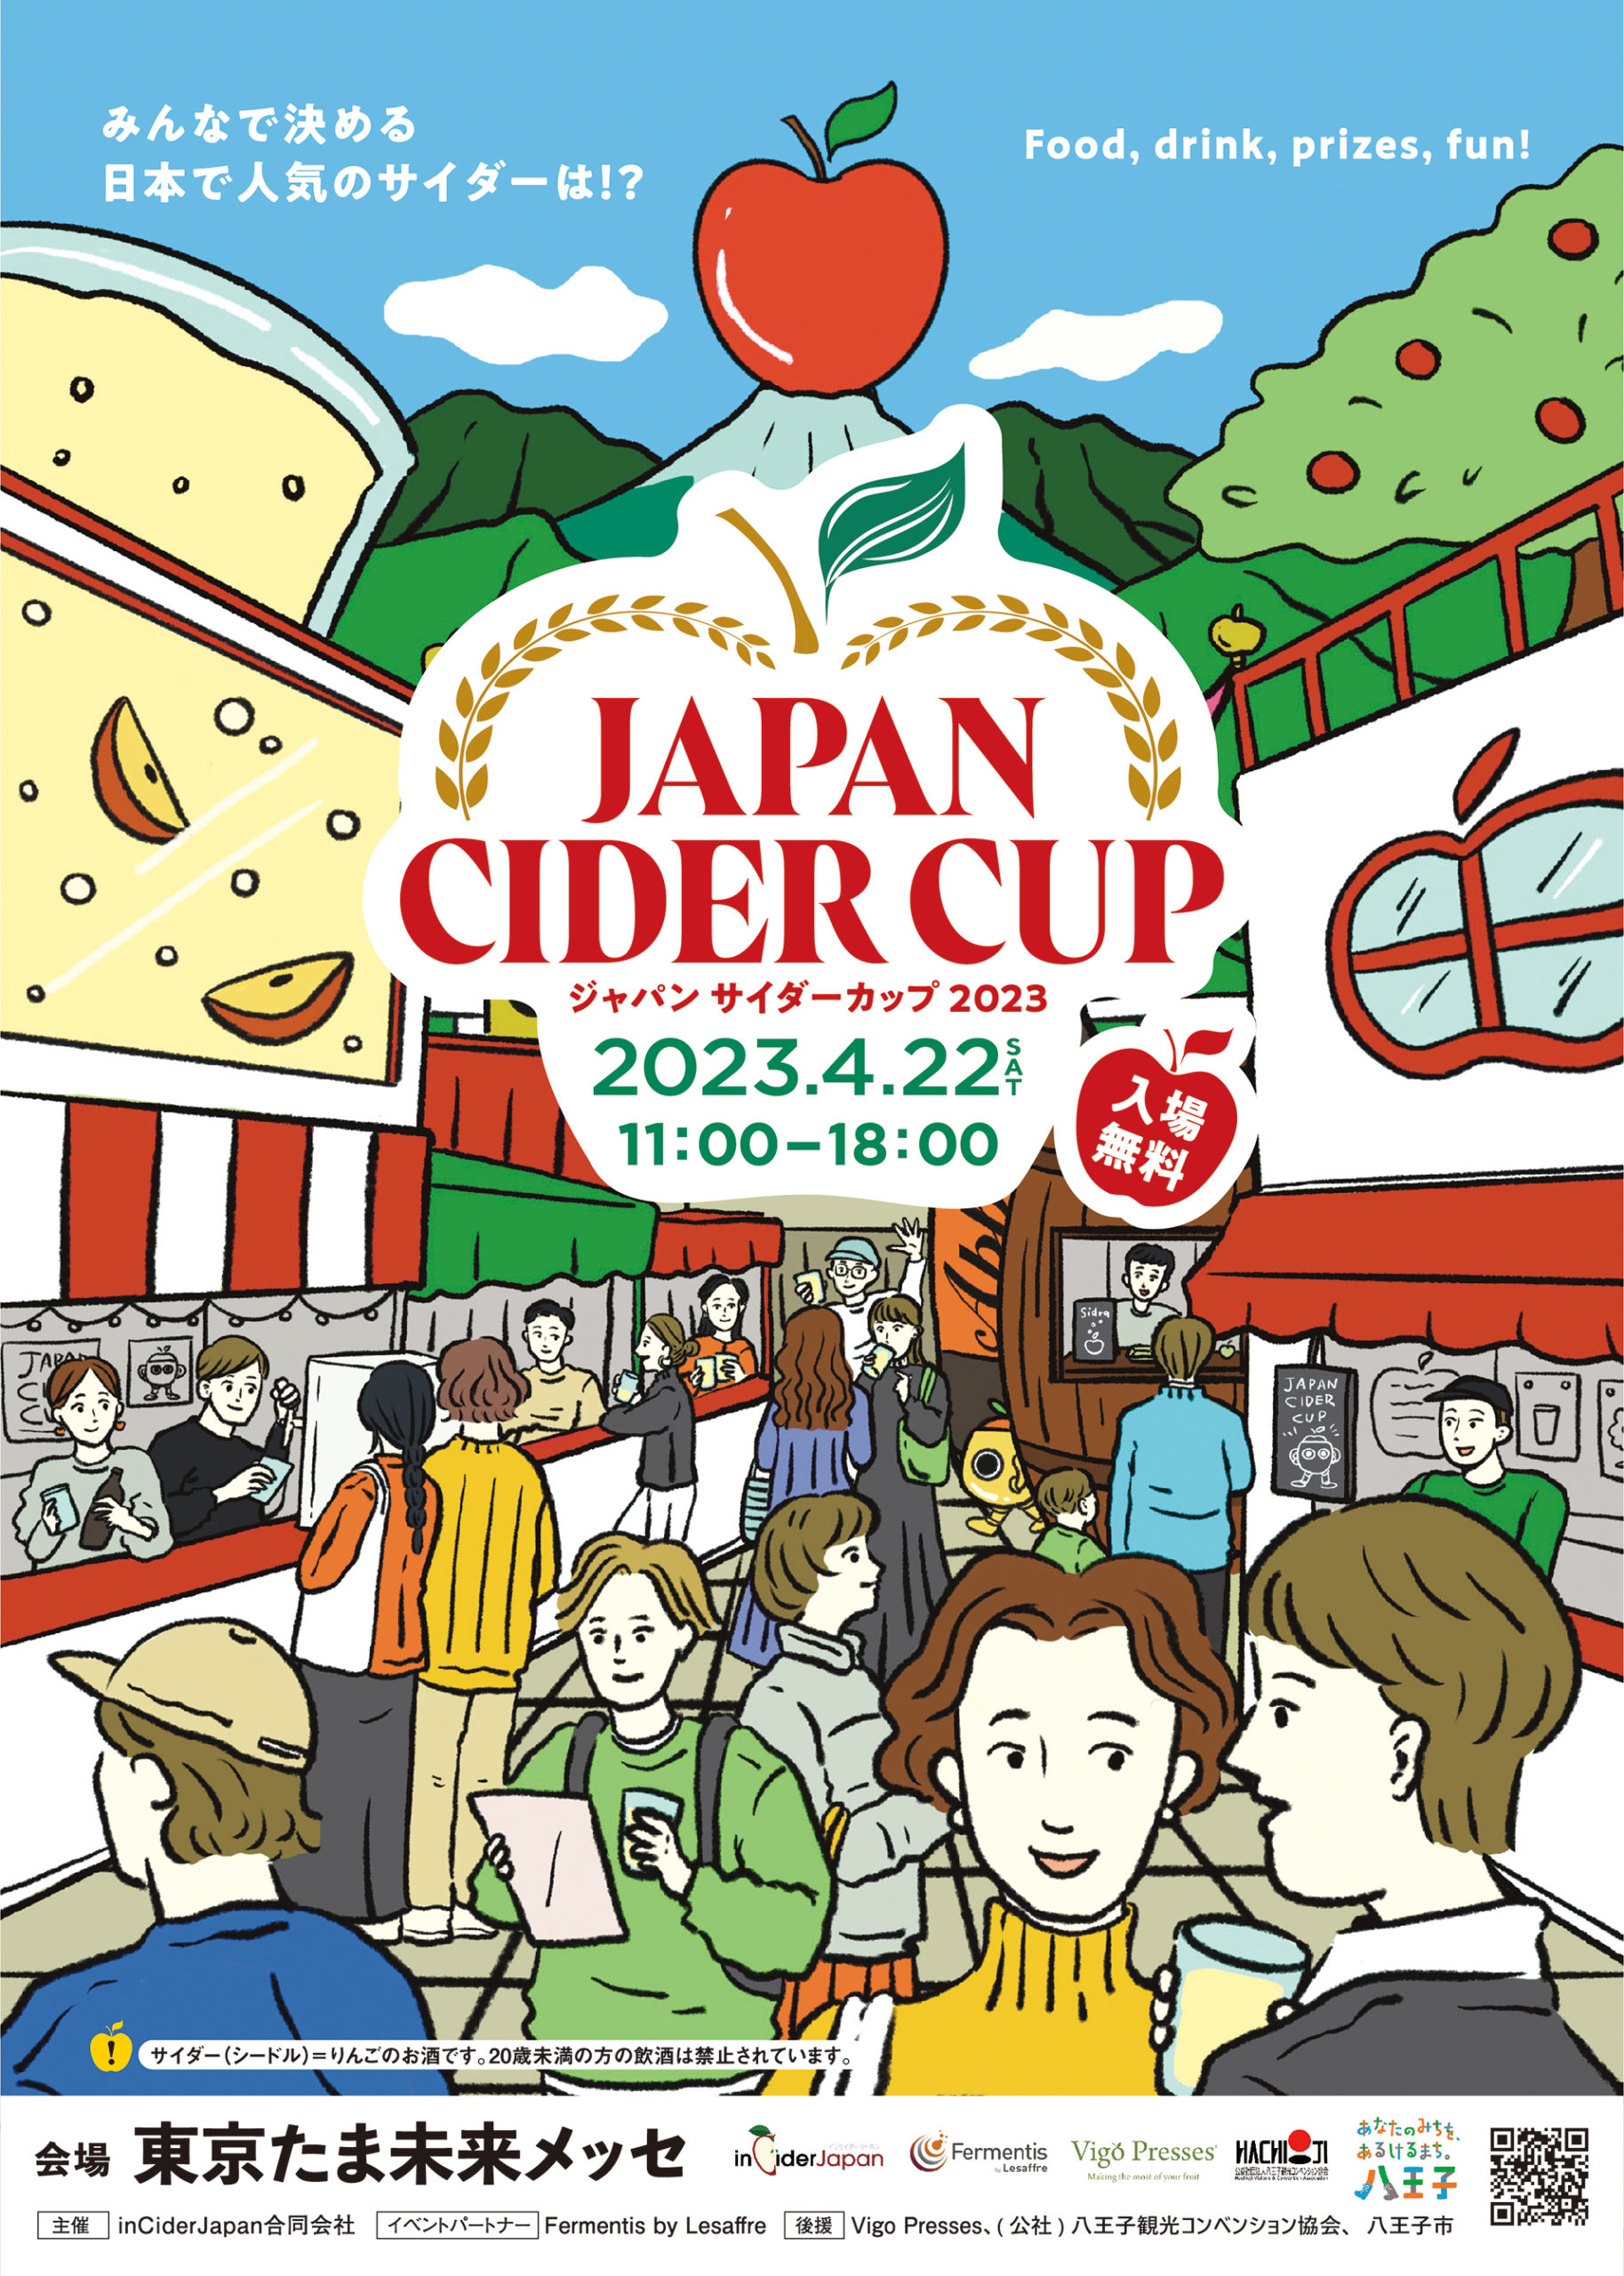 JAPAN CIDER CUP EVENT POSTER 2023